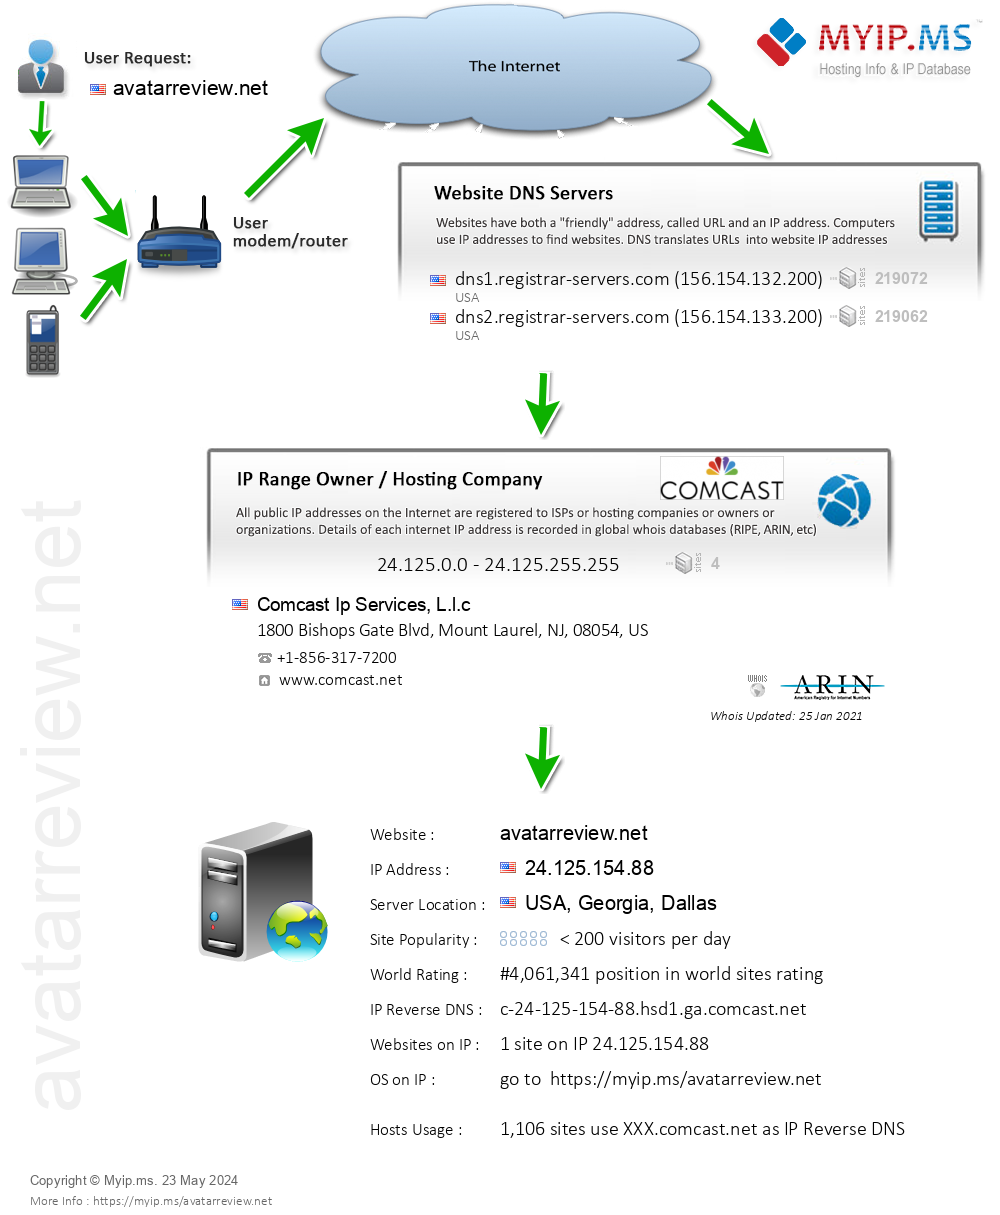 Avatarreview.net - Website Hosting Visual IP Diagram